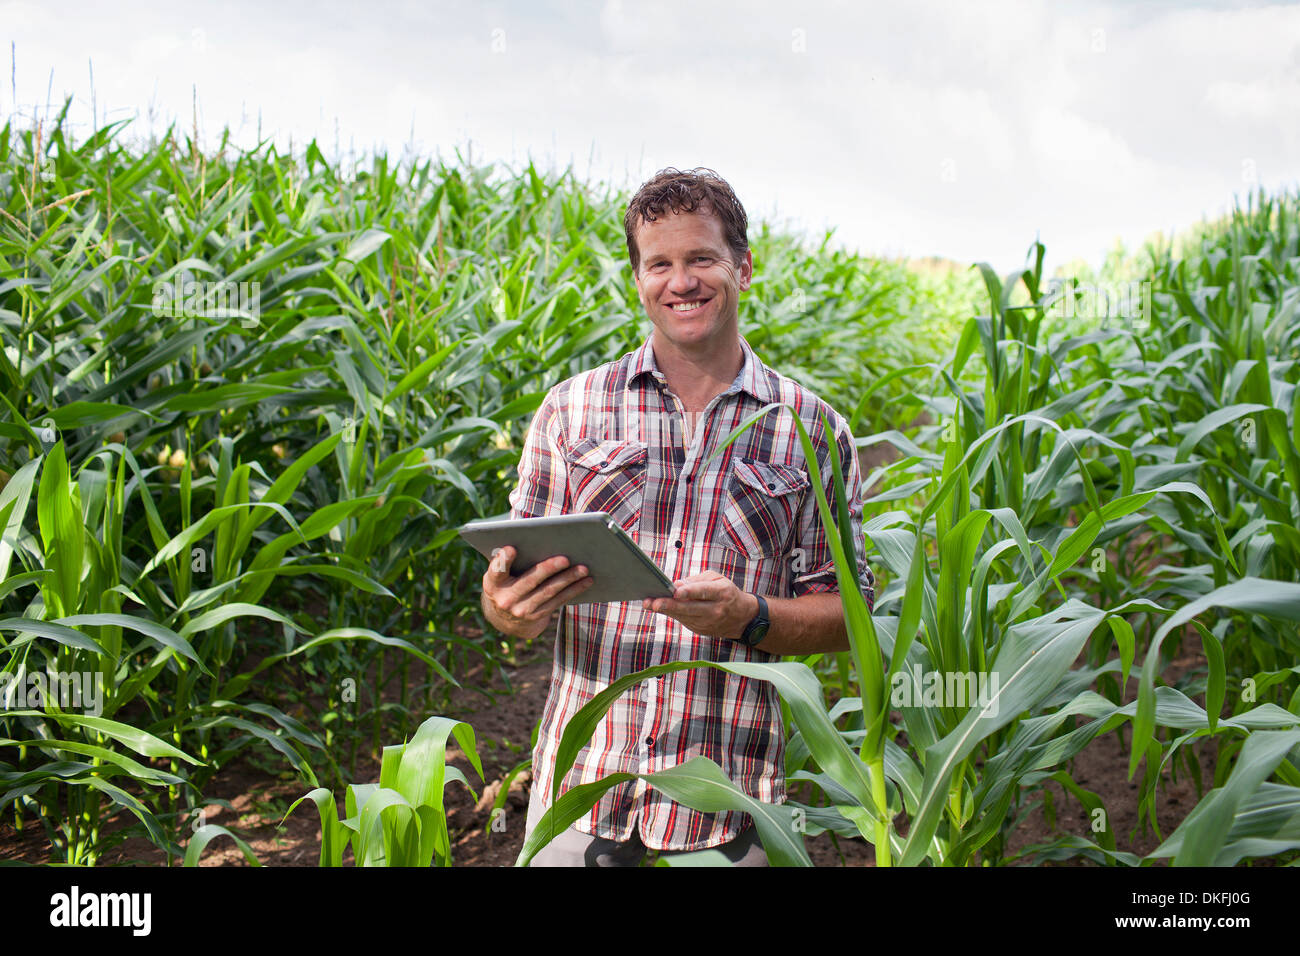 Farmer standing in field of crops using digital tablet Stock Photo